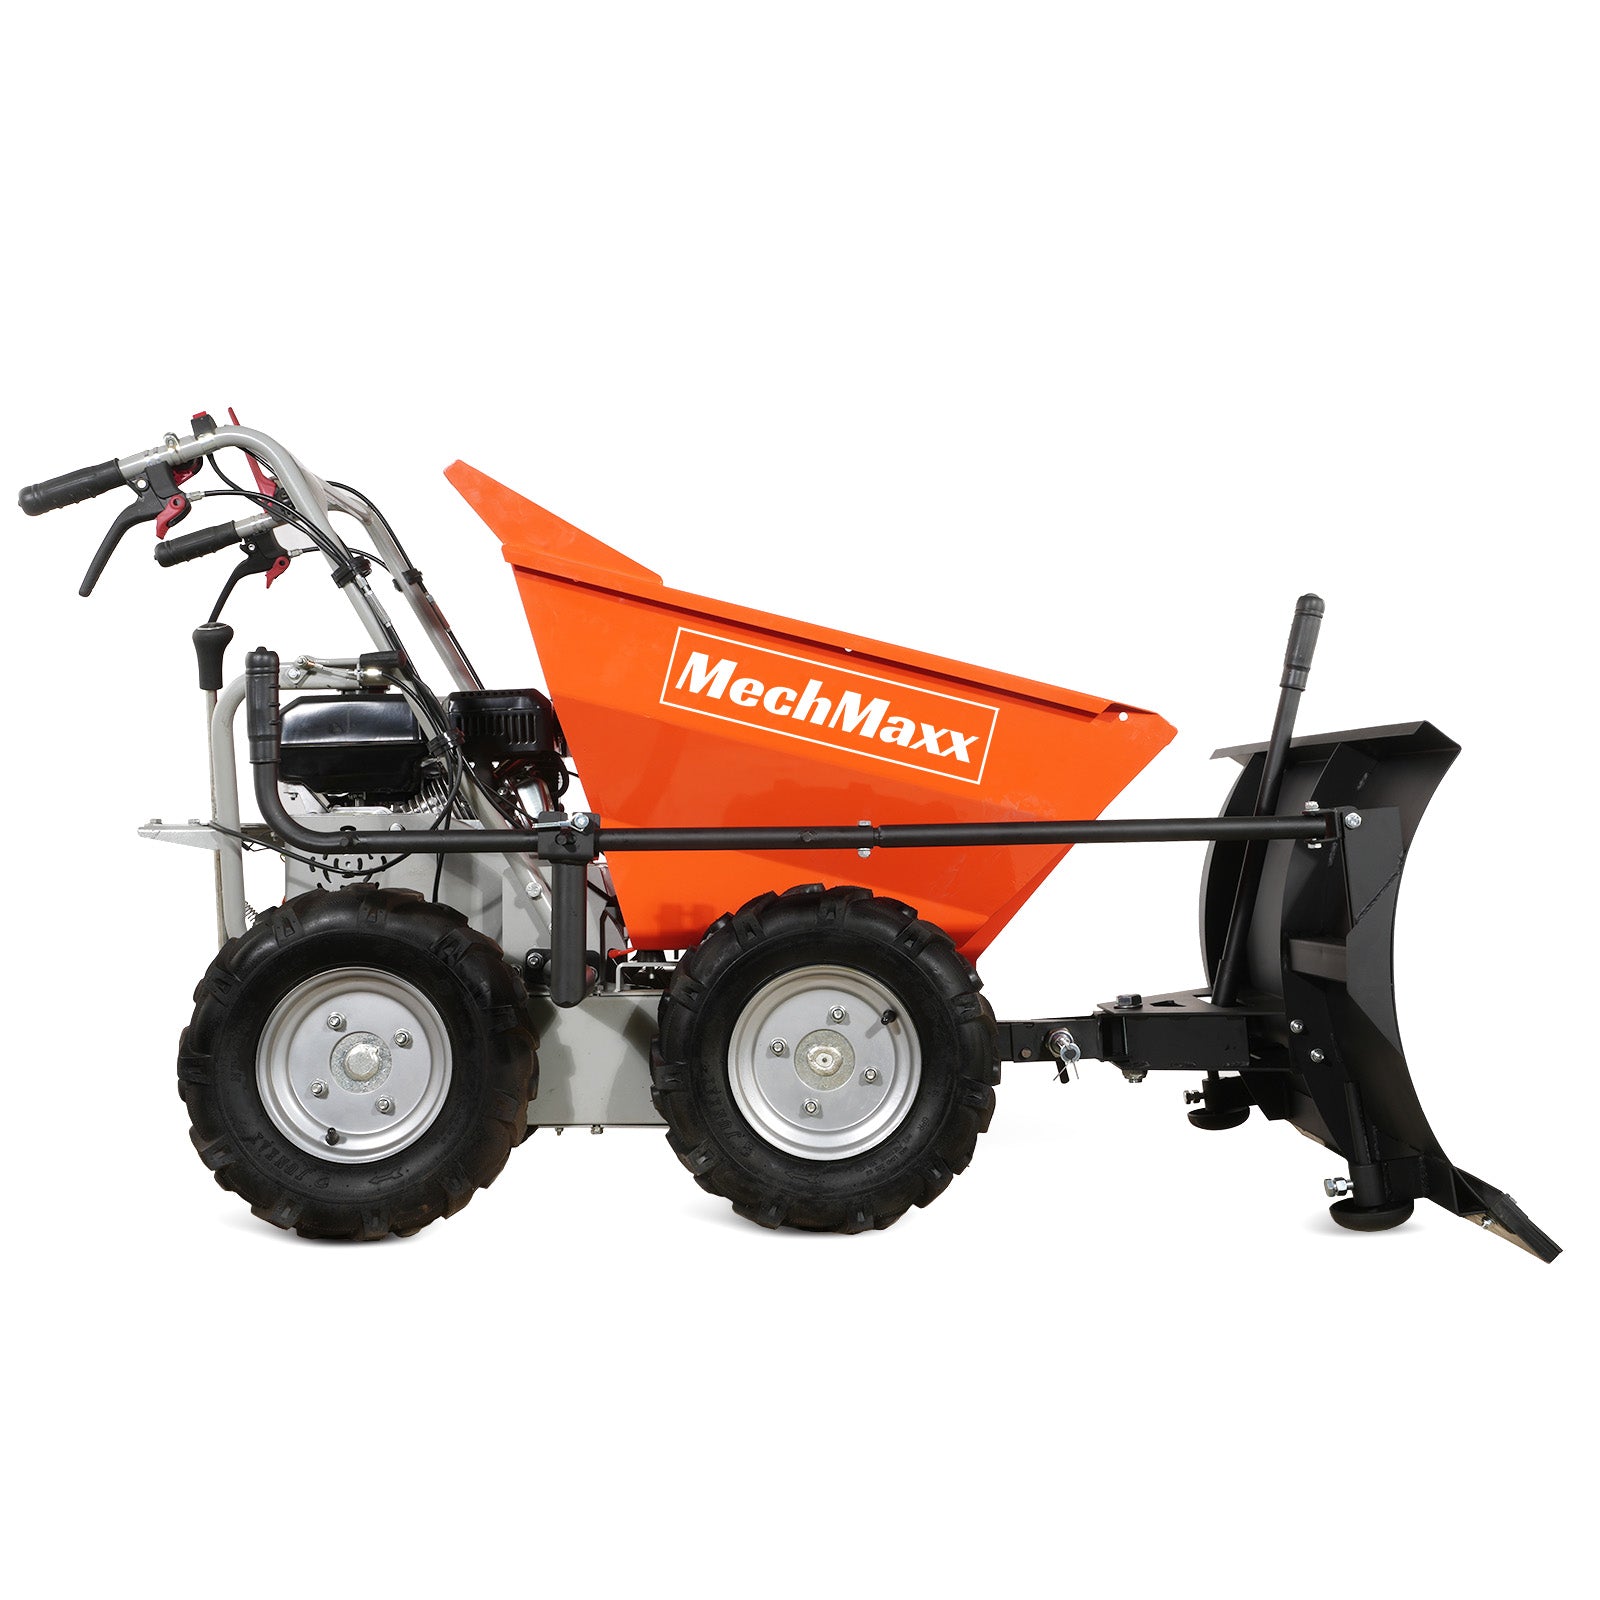 660lbs Capacity 7HP Gas Powered Wheelbarrow Cart with Snow Shovel